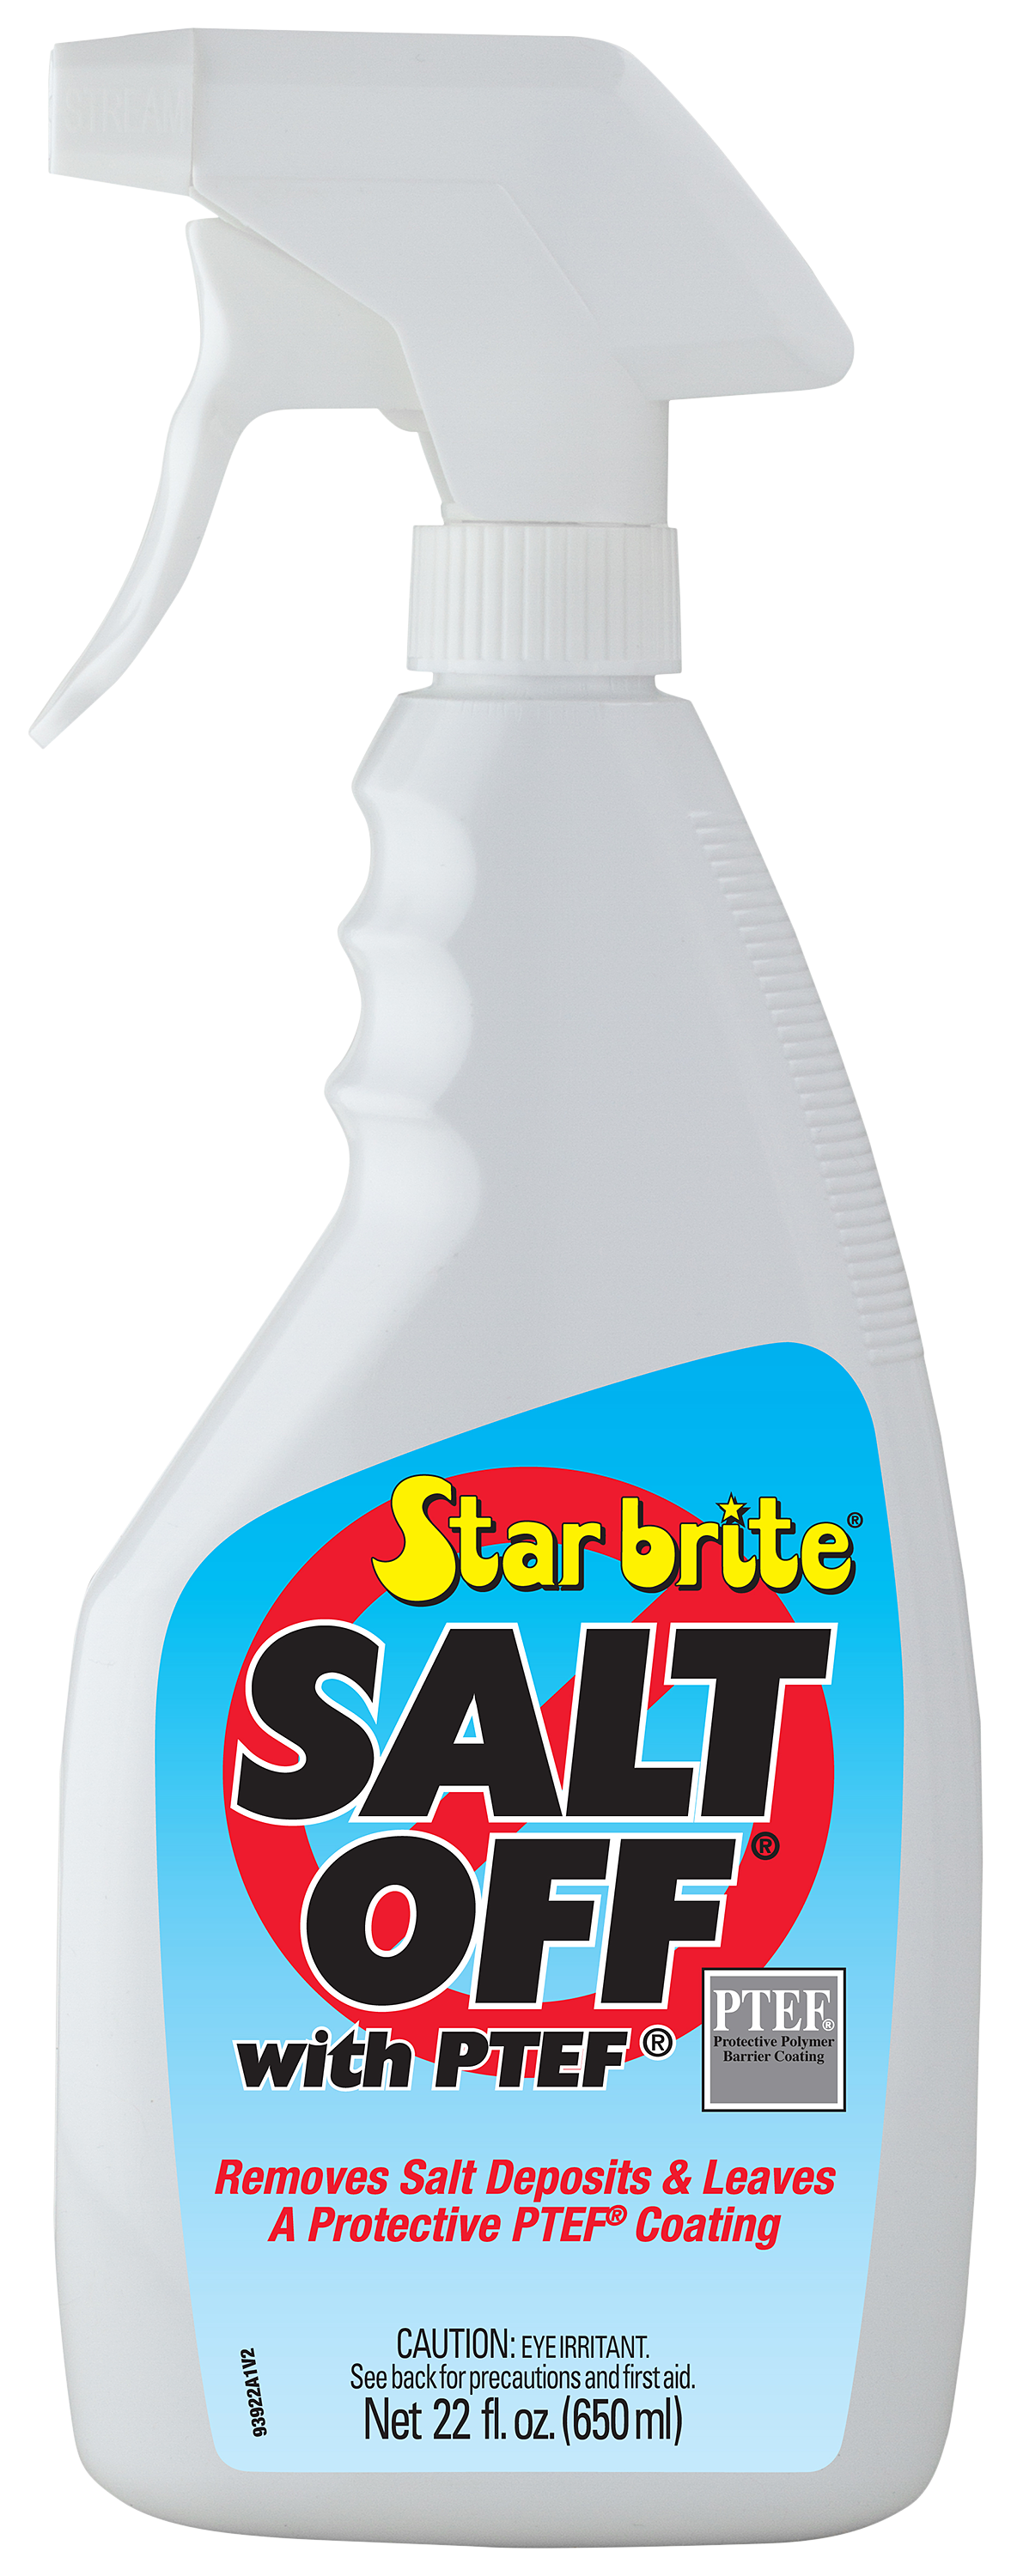 Star brite Salt Off Salt Removing Wash